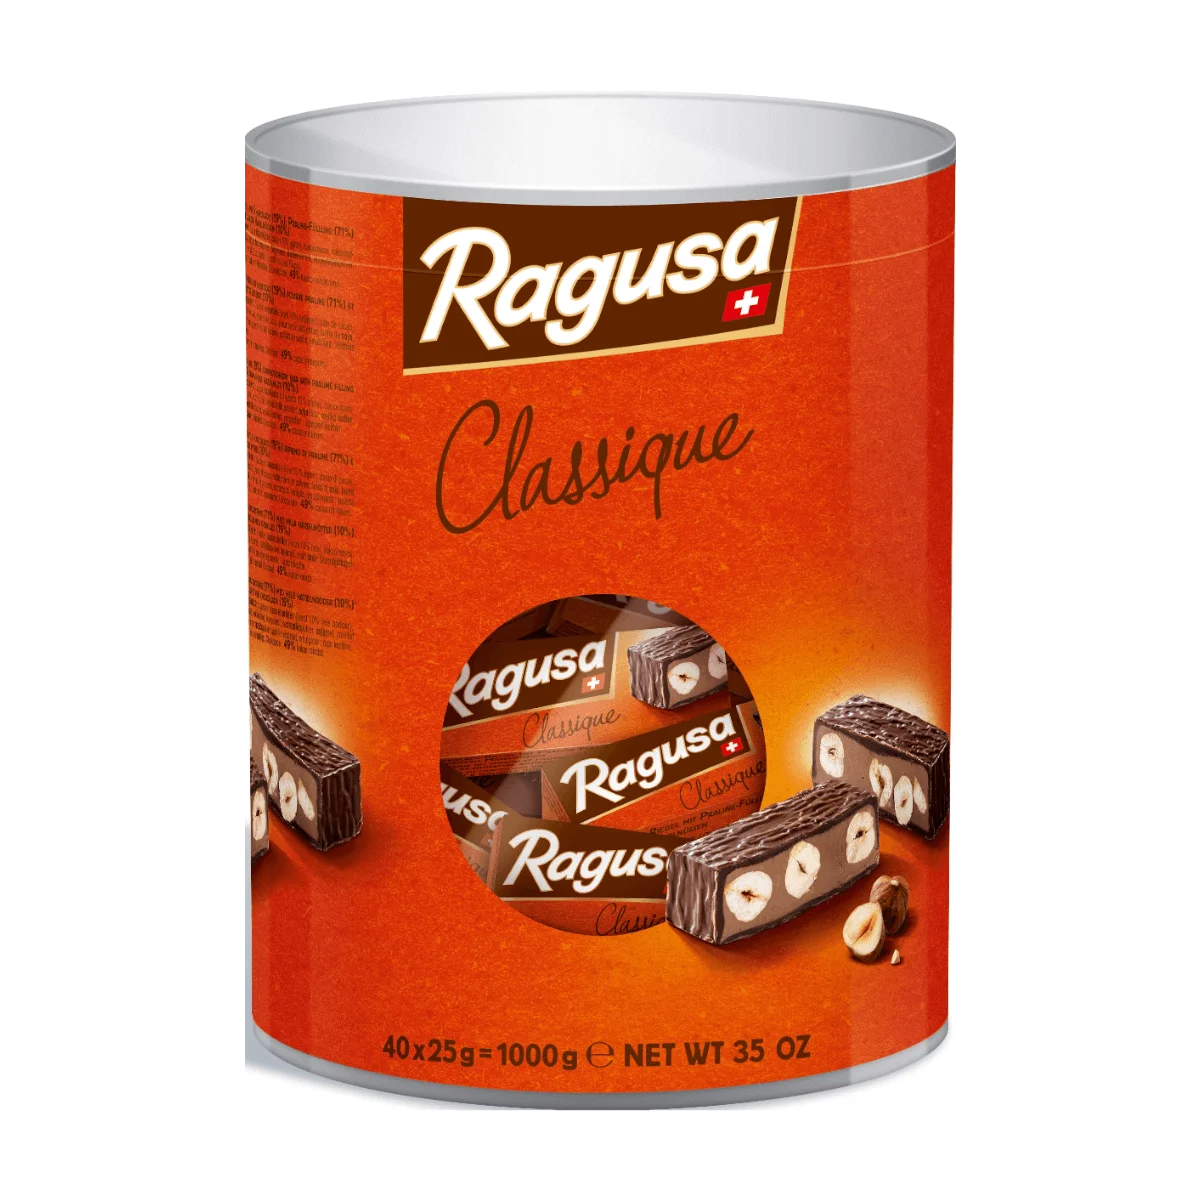 Ragusa Classique Schweizer Premium Schokolade, 40 x 25 g